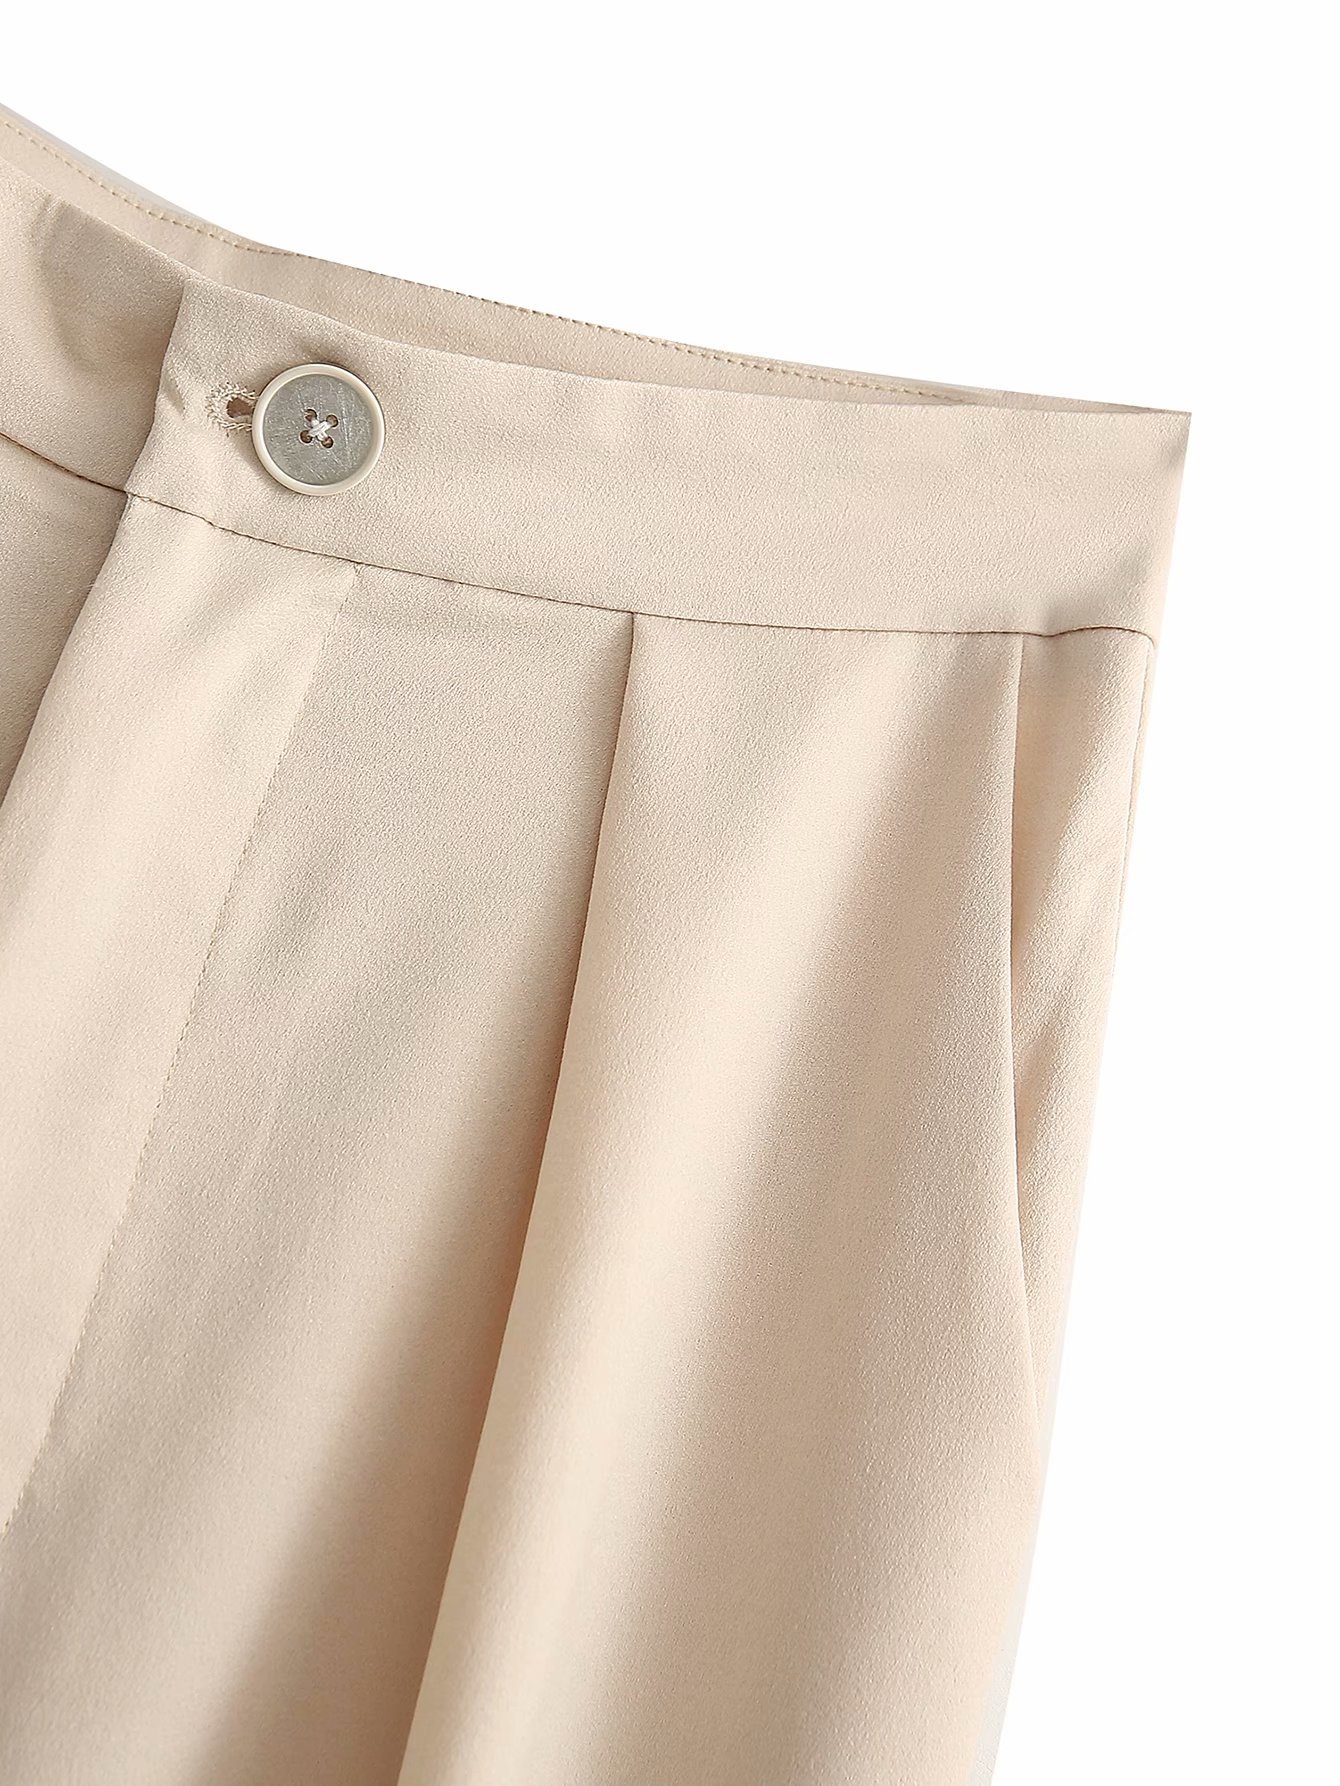 spring high waist drape wide leg pants nihaostyles wholesale clothing NSAM82145